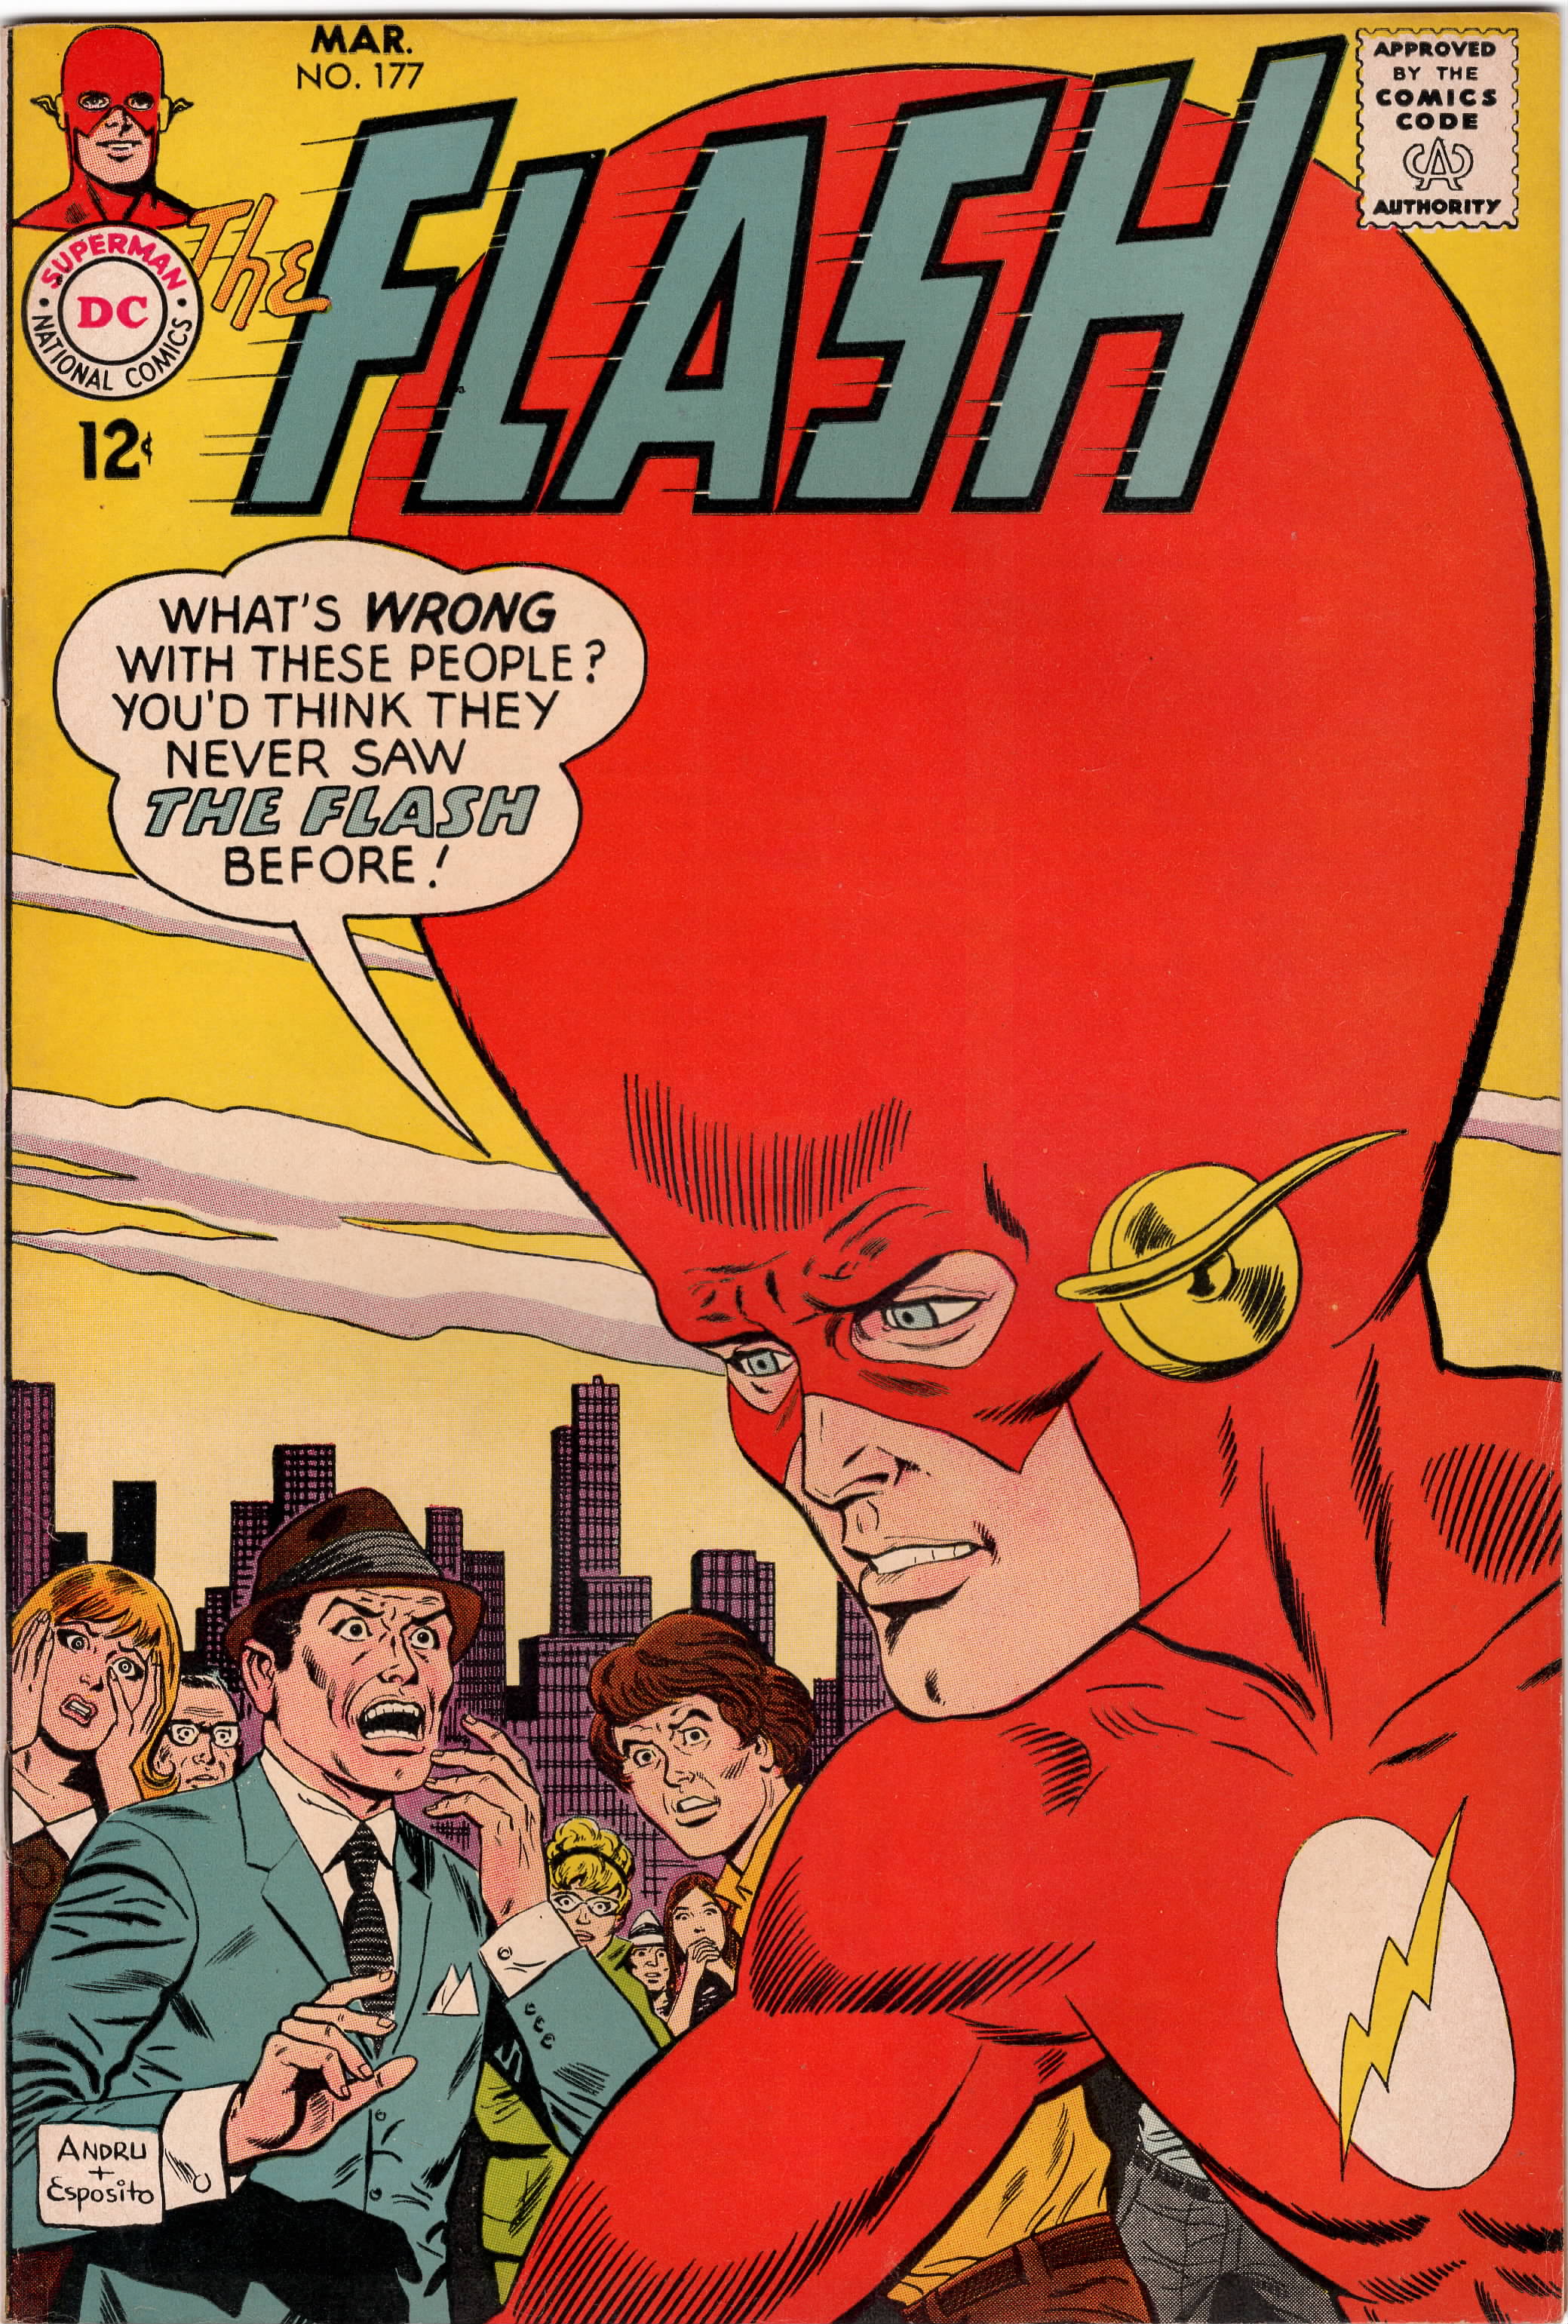 Flash #177